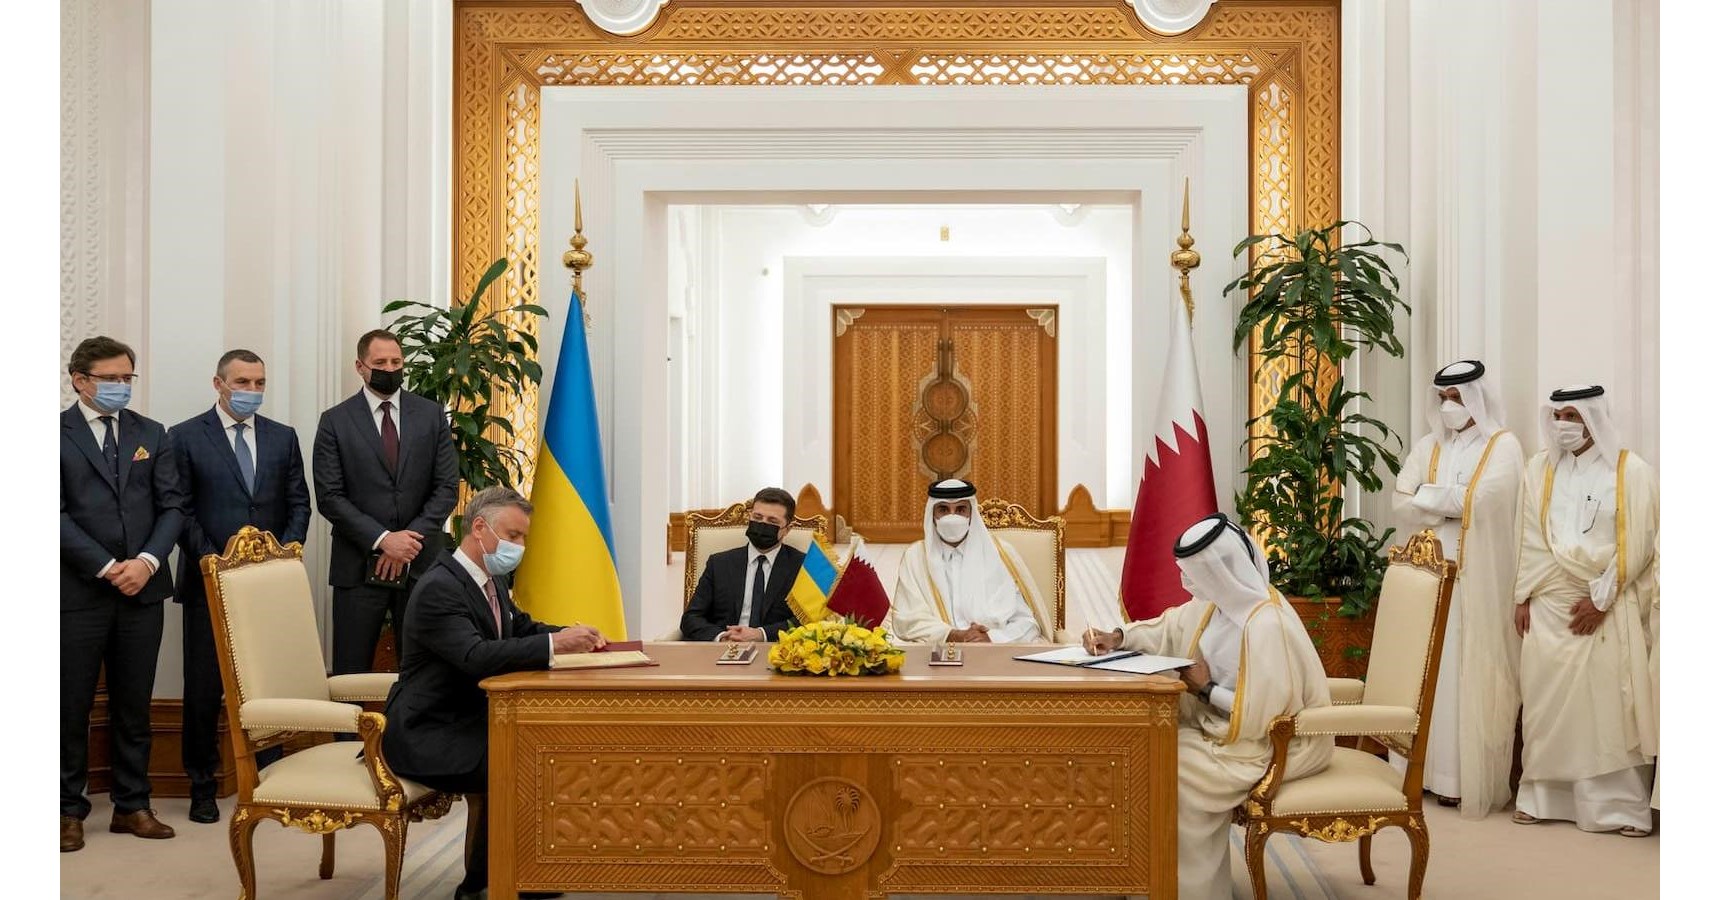 Ukraine's Acting Minister of Energy Yuriy Vitrenko and Qatar's Minister of State for Energy Saad bin Sherid Al- Kaabi sign a memorandum of understanding in April 2021 (Source: Ministry of Energy of Ukraine)